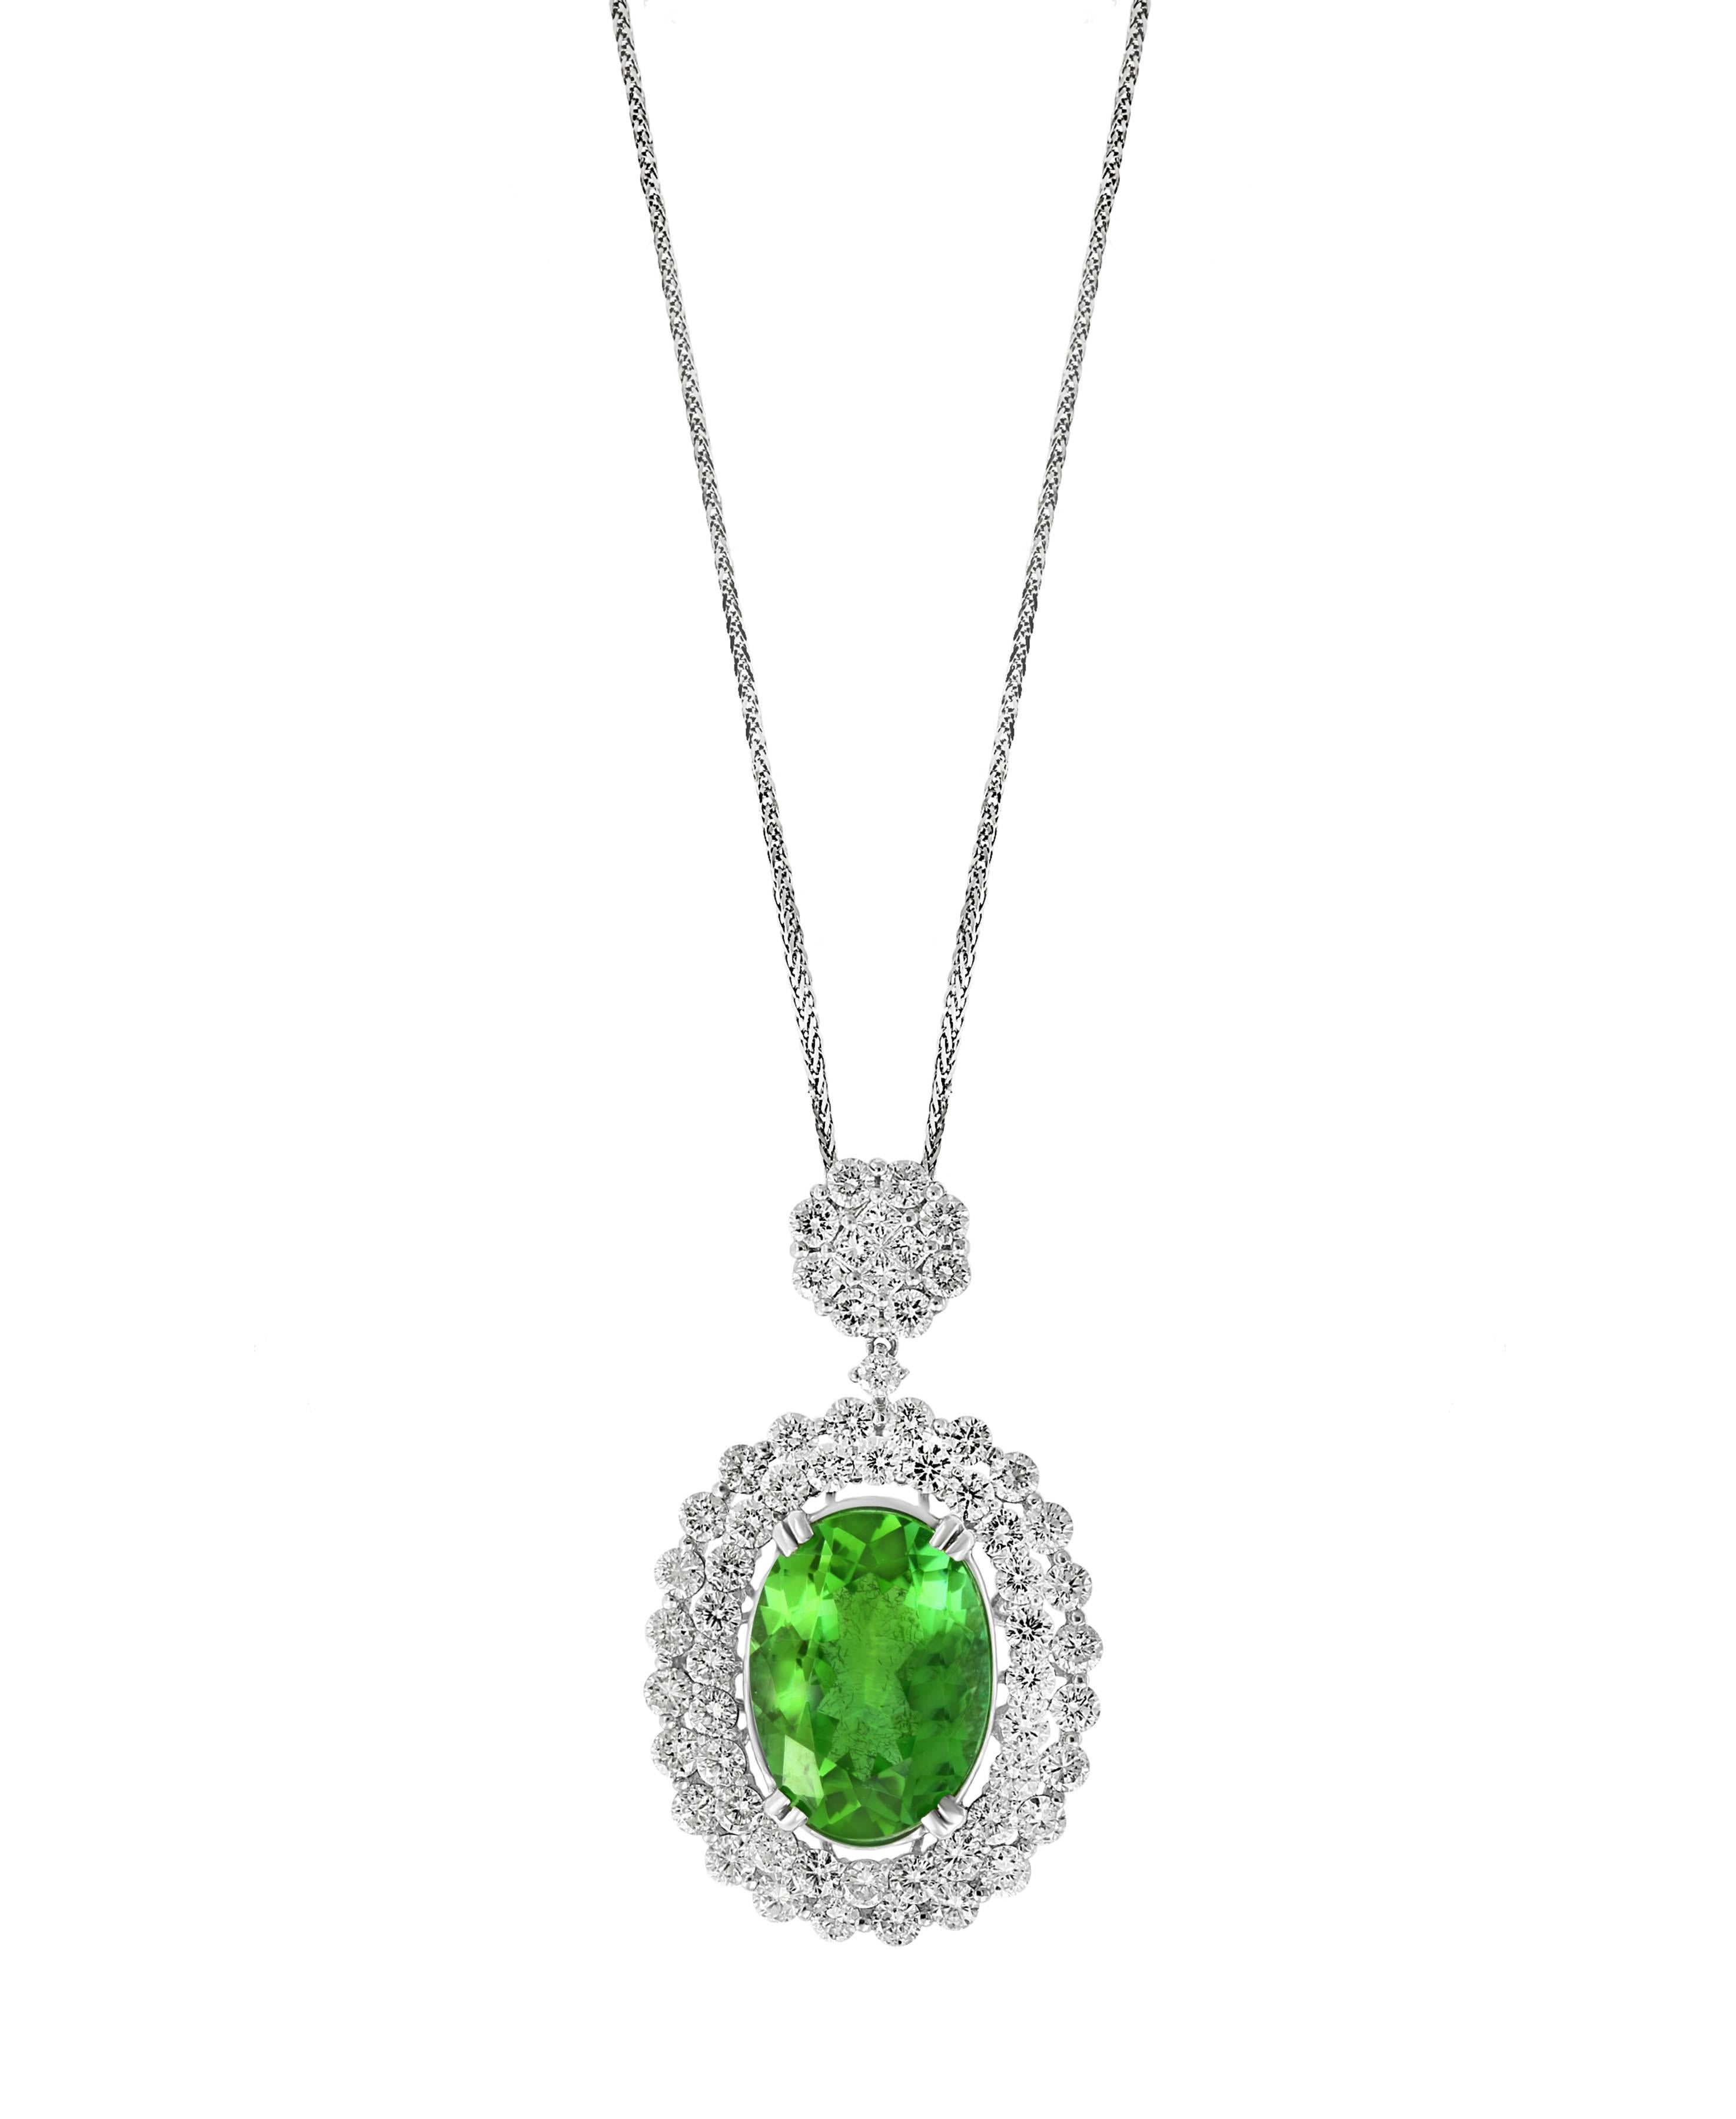 Oval Cut AGL Certified 7 Ct Pariba Tourmaline & 4.5 Ct Diamond Pendant Necklace 18 K Gold For Sale